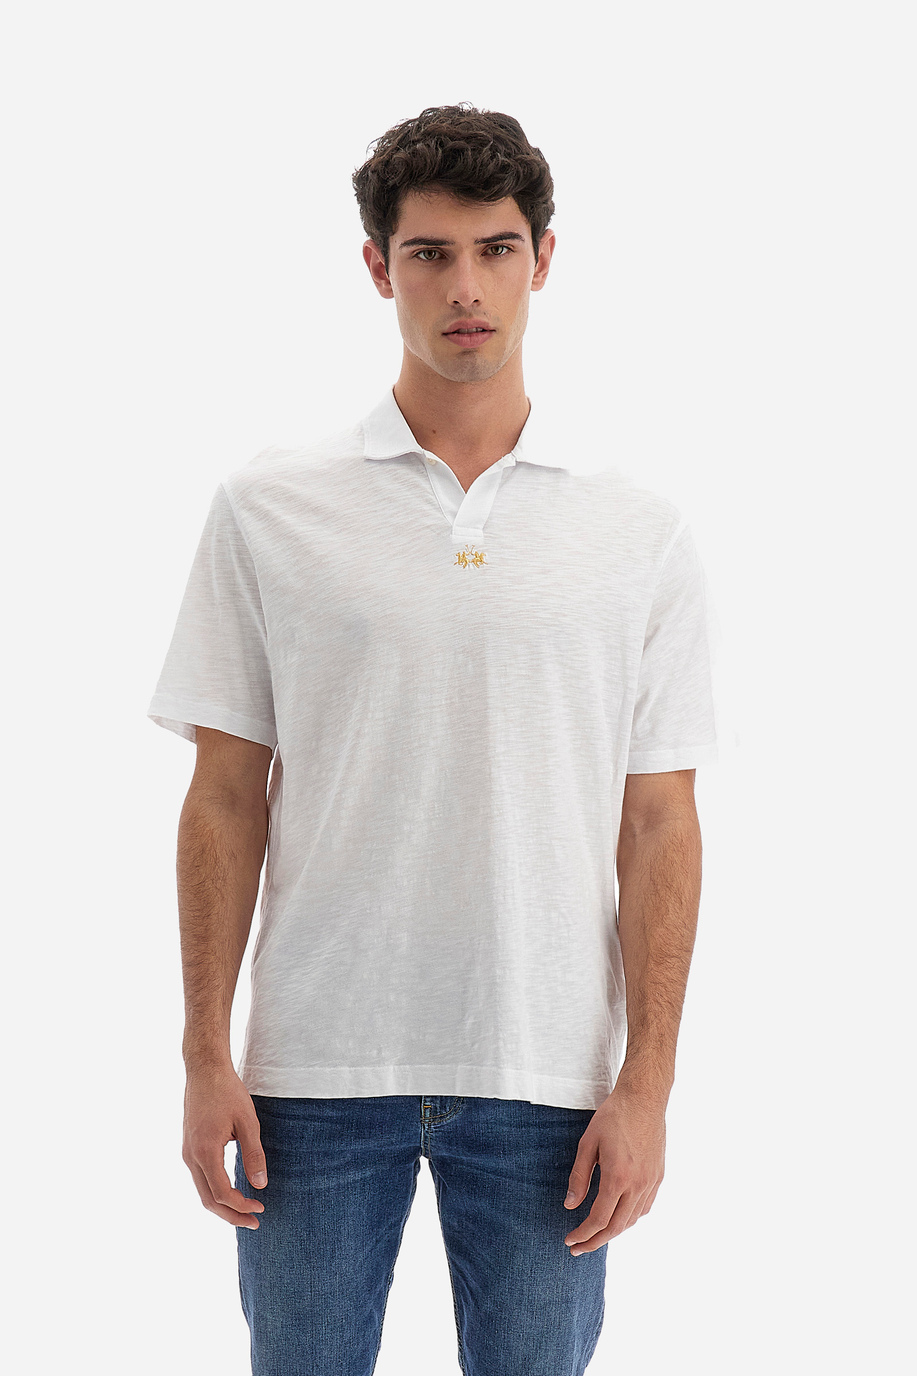 Regular fit 100% cotton short-sleeved polo shirt for men - Capsule Palermo - La Martina Loves Sicily | La Martina - Official Online Shop